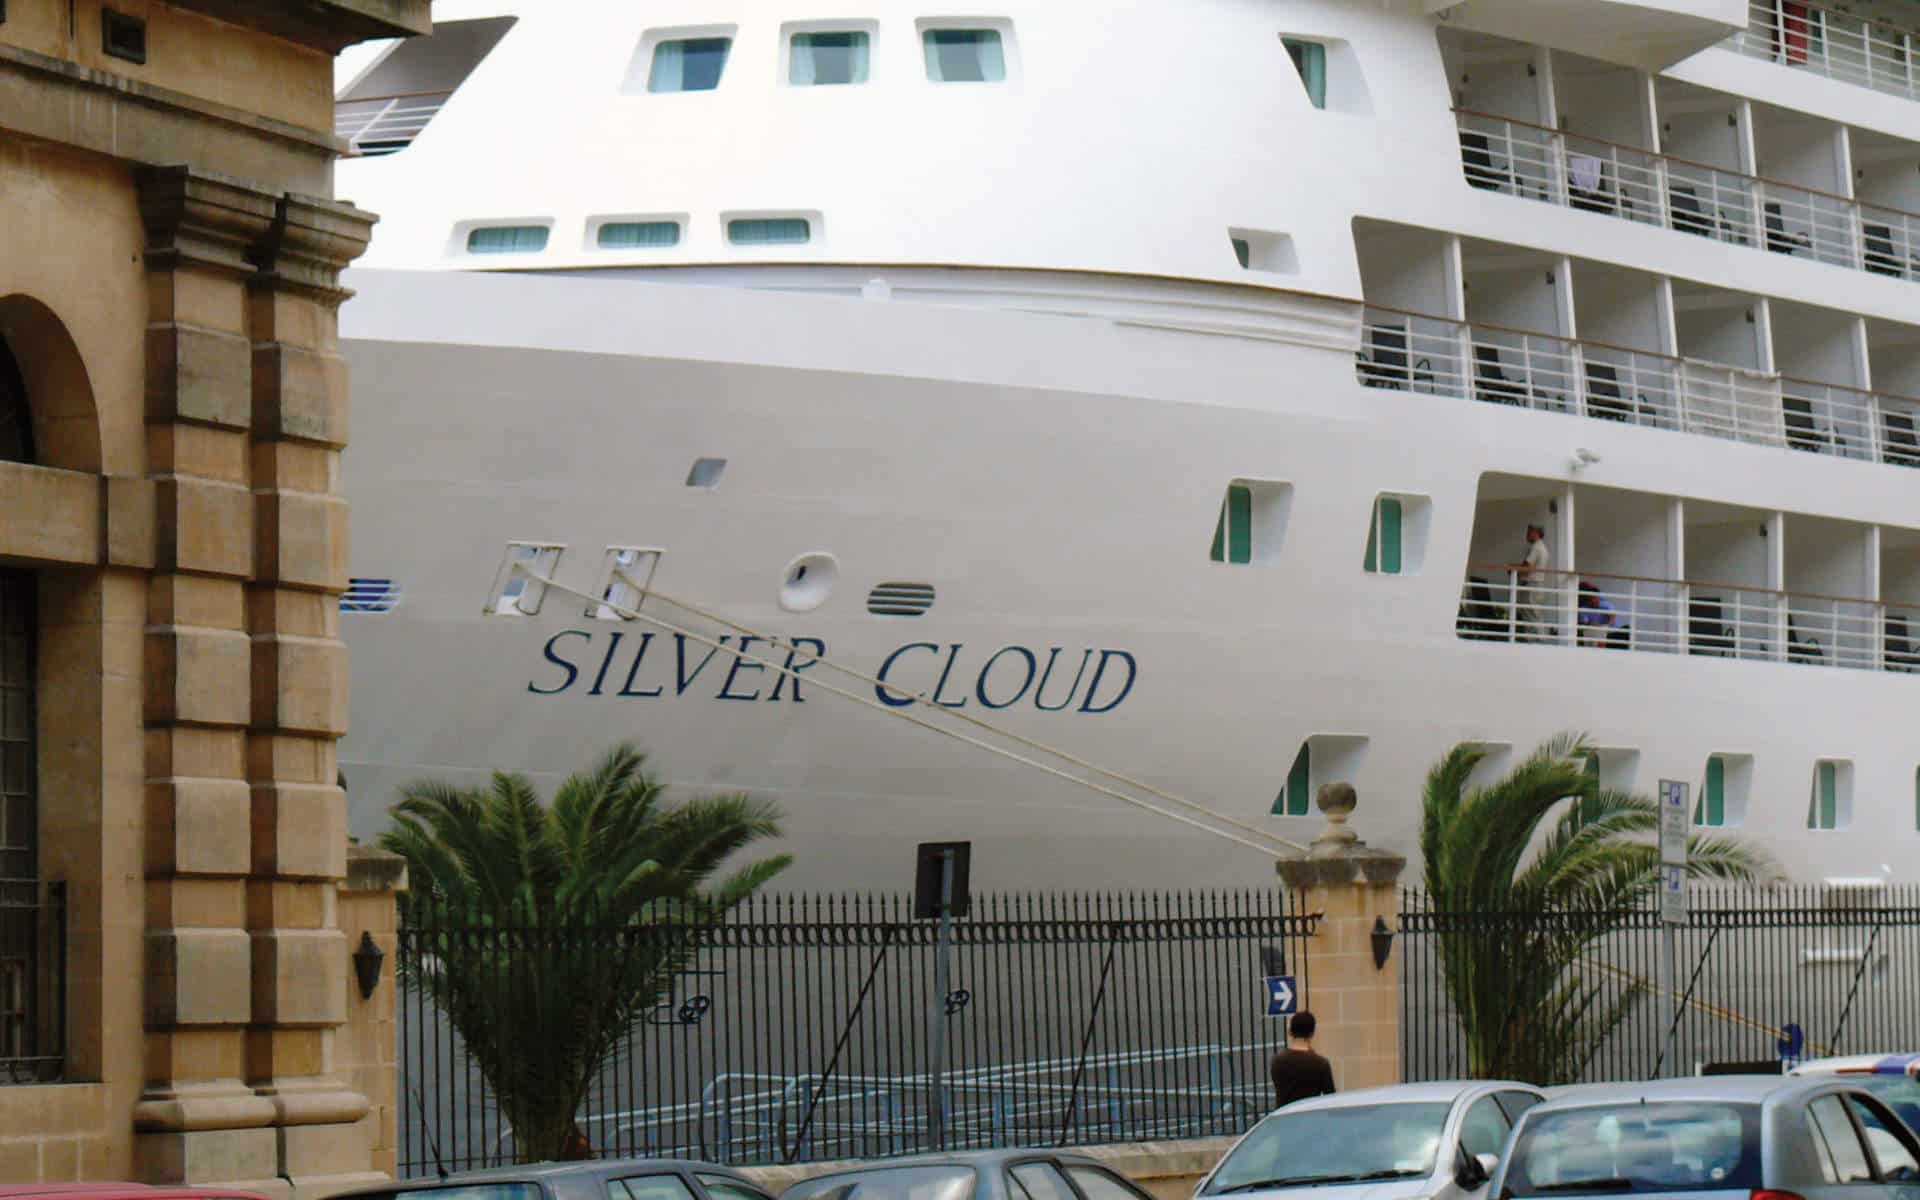 The Silver Cloud cruise ship in Valetta, Malta.